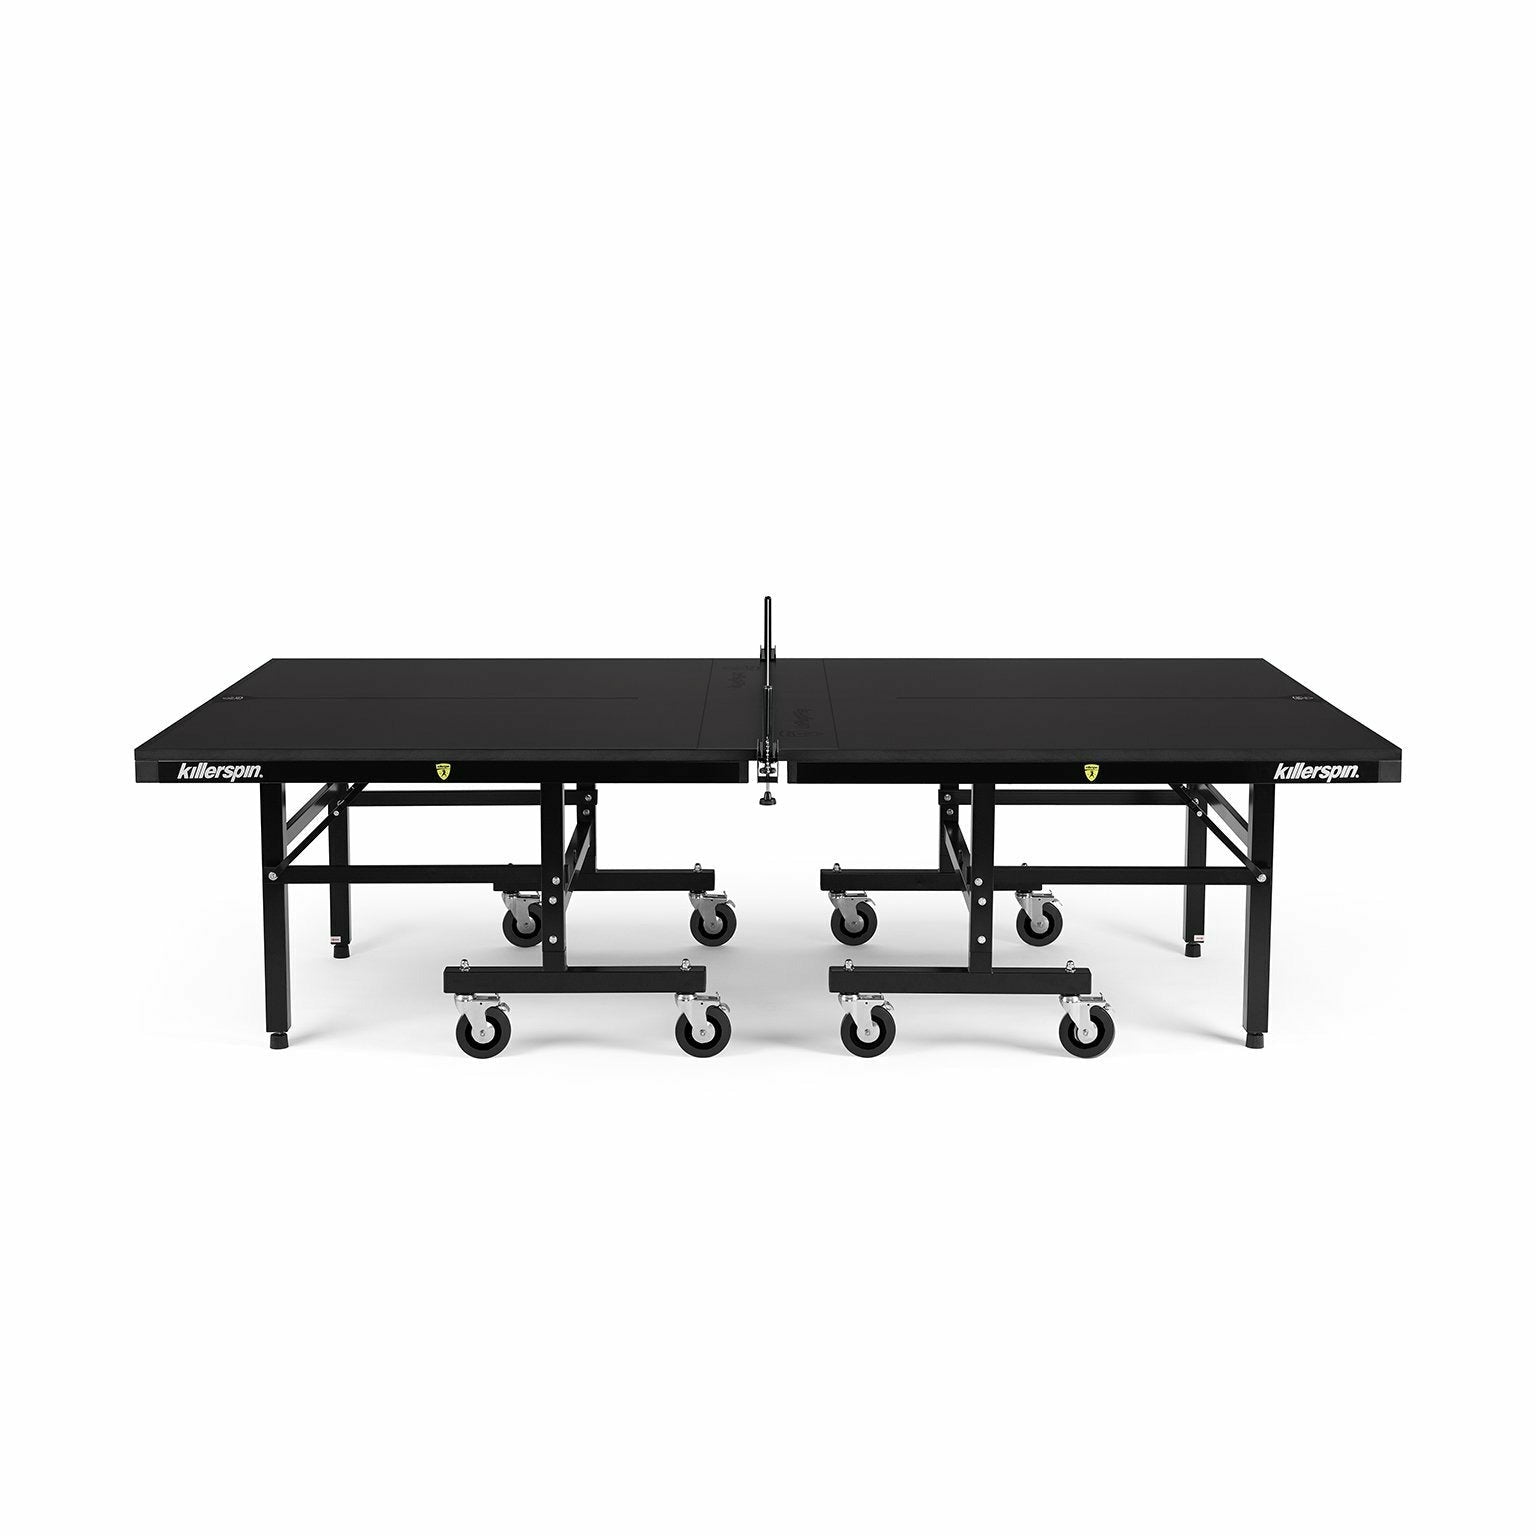 Killerspin MyT 415 Max - Jet Black Table Tennis Table 2